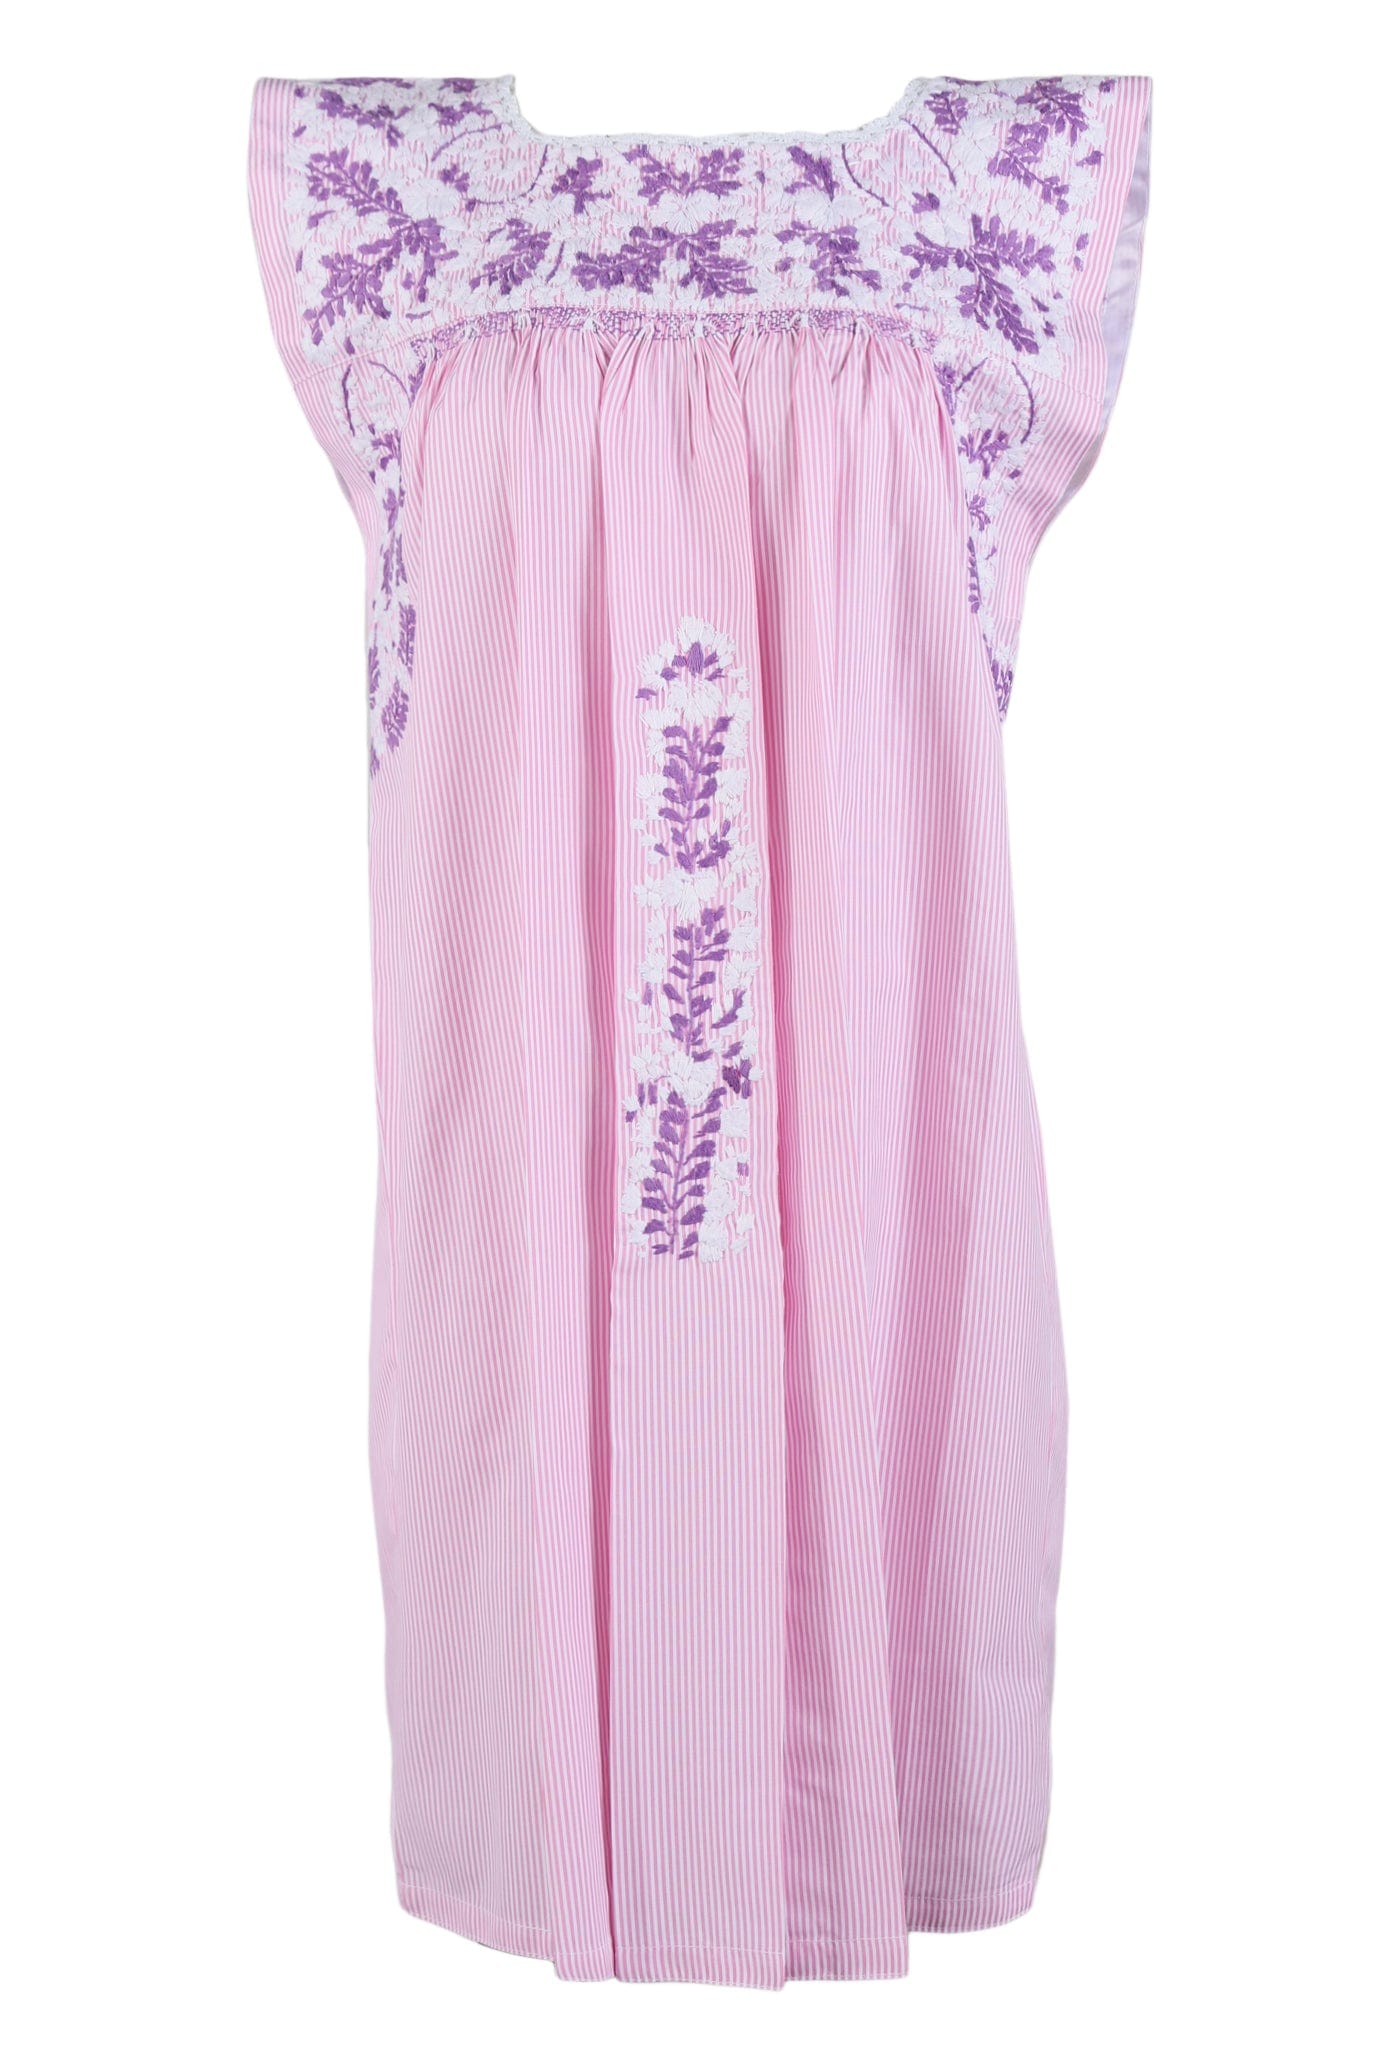 Flores Short Dress Dress Pastel Nieve y Purpura